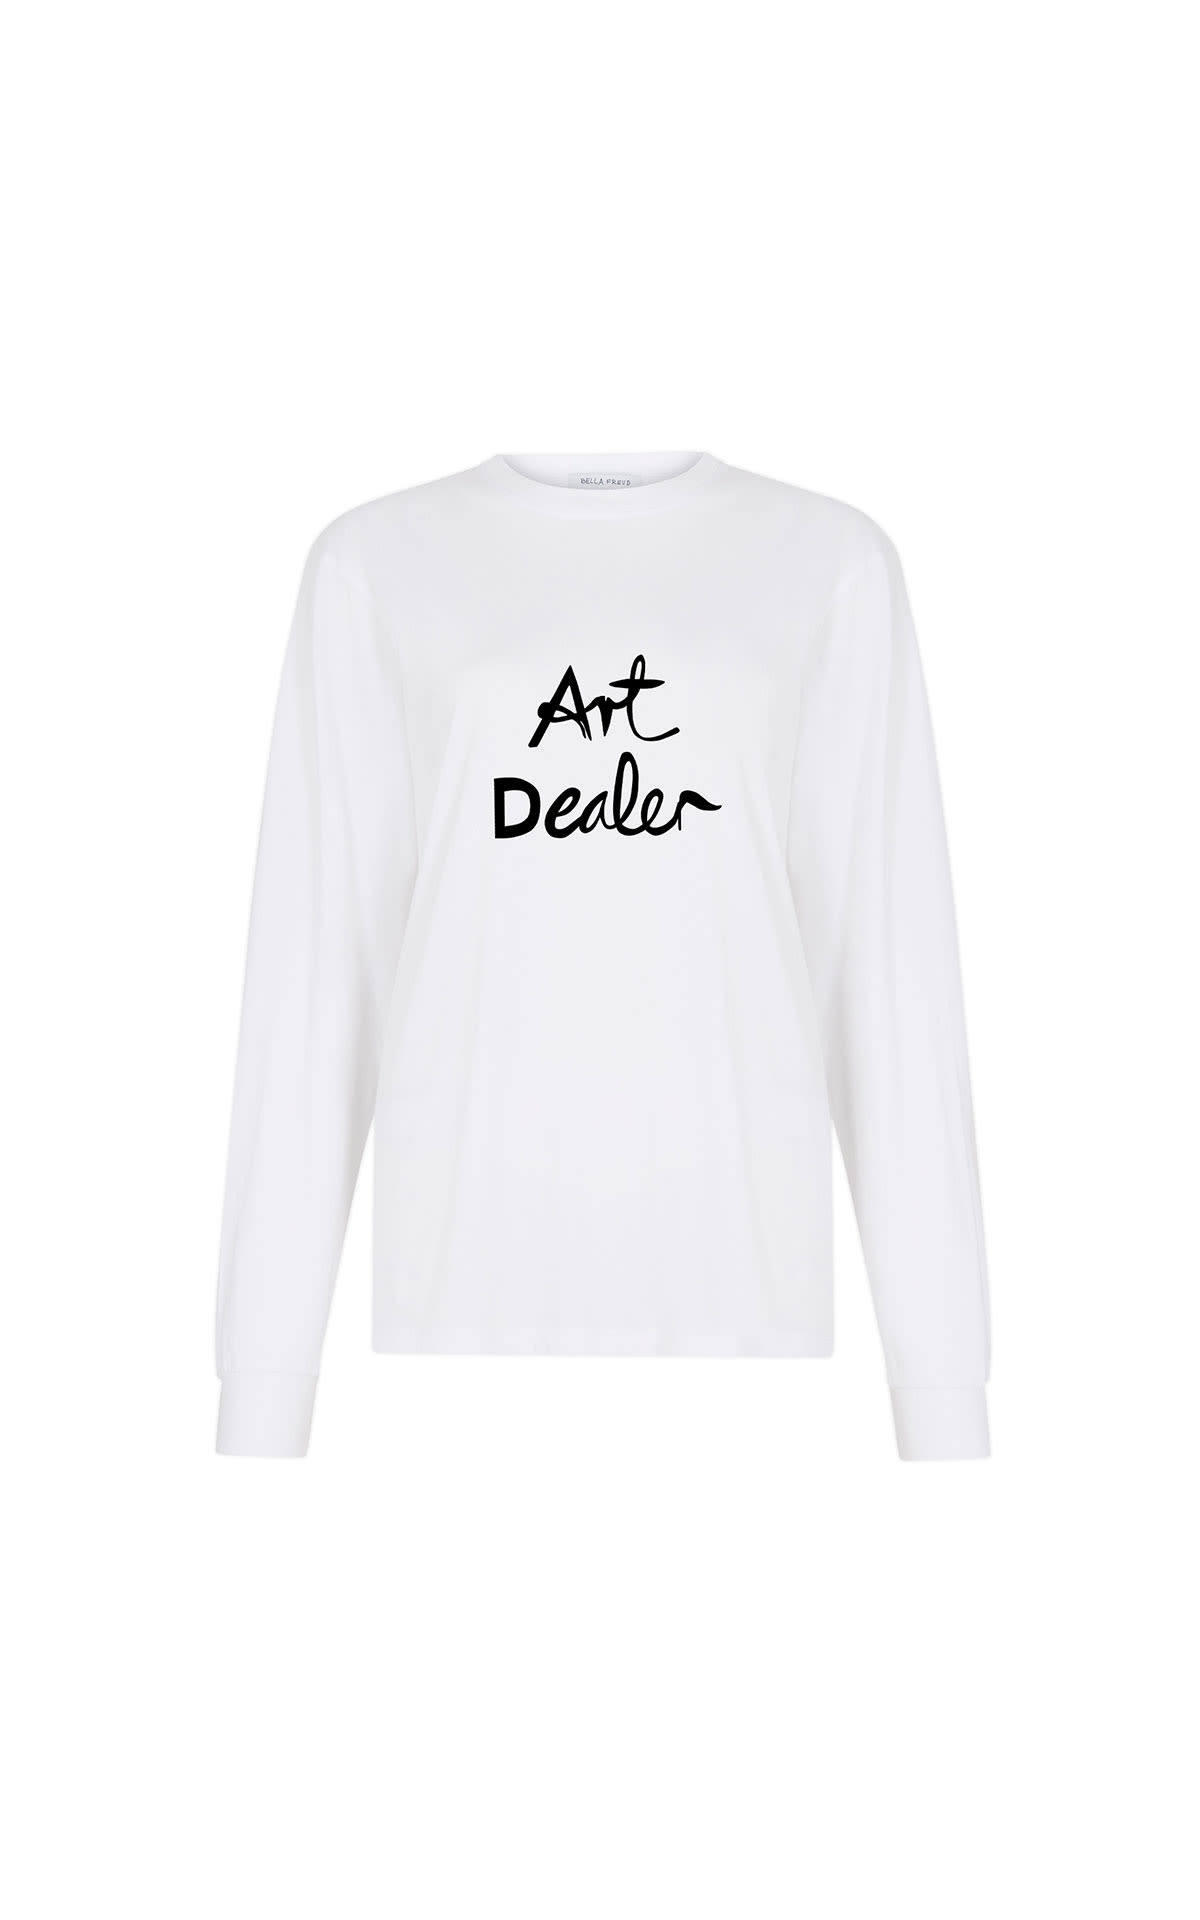 Bella Freud Art dealer white long sleeve from Bicester Village